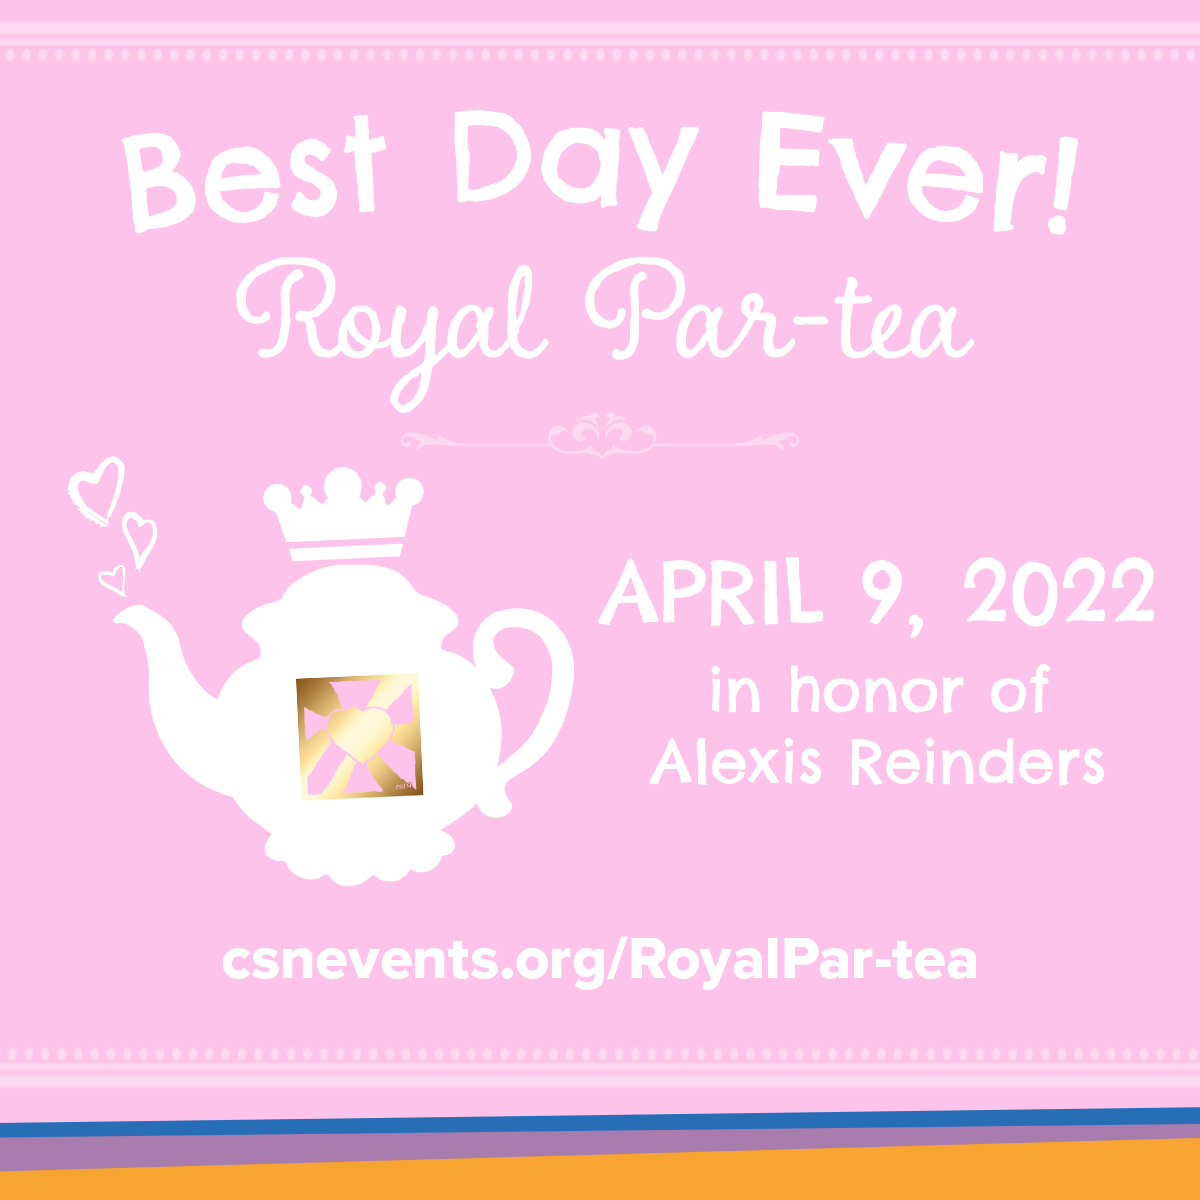 Royal Par-tea